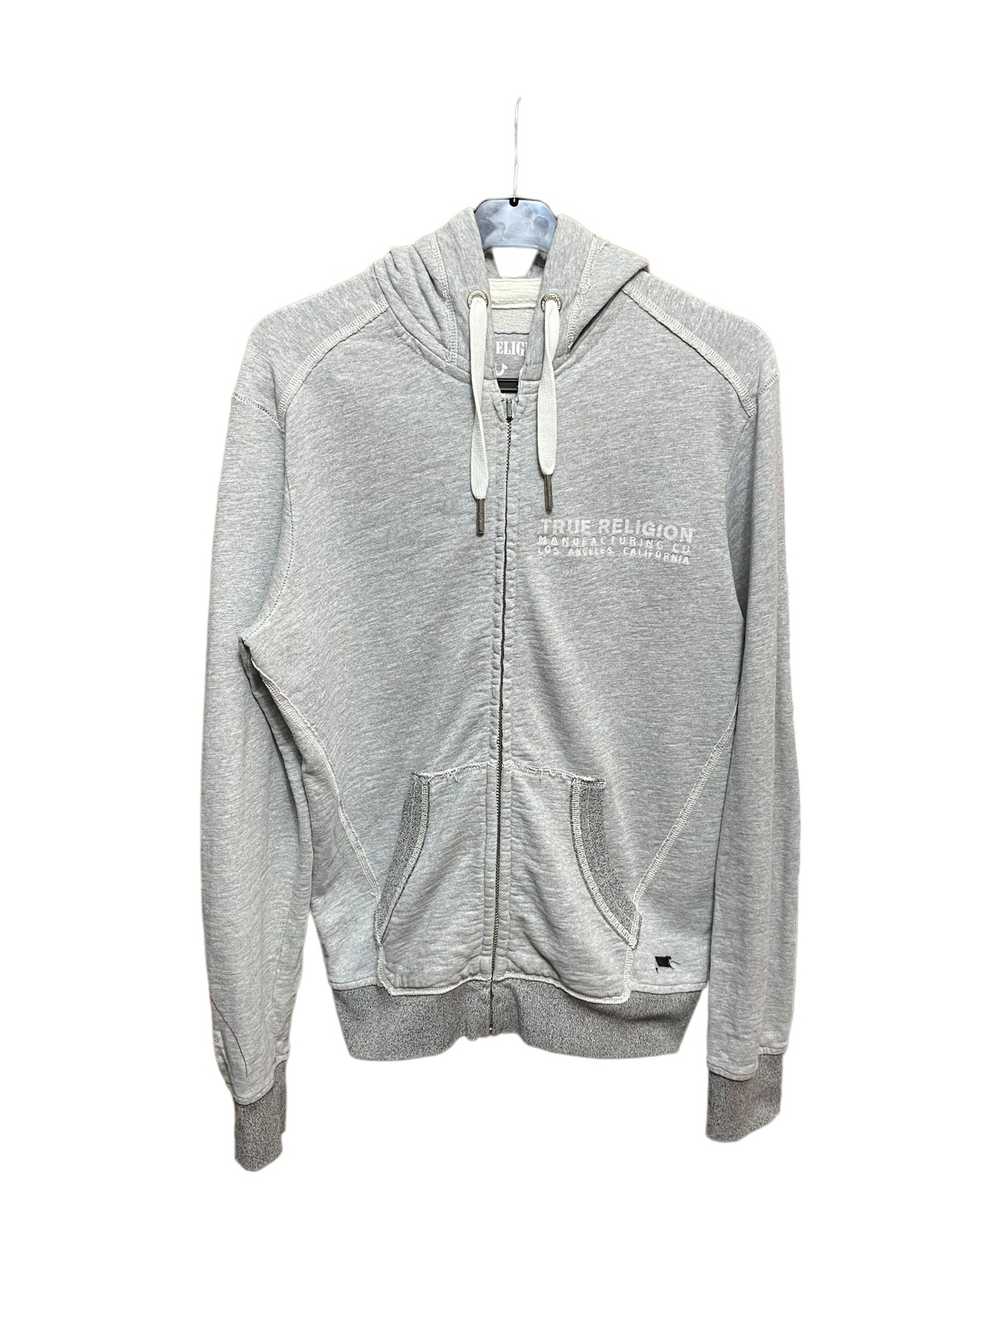 True Religion True Religion gray zip hoodie, size… - image 1